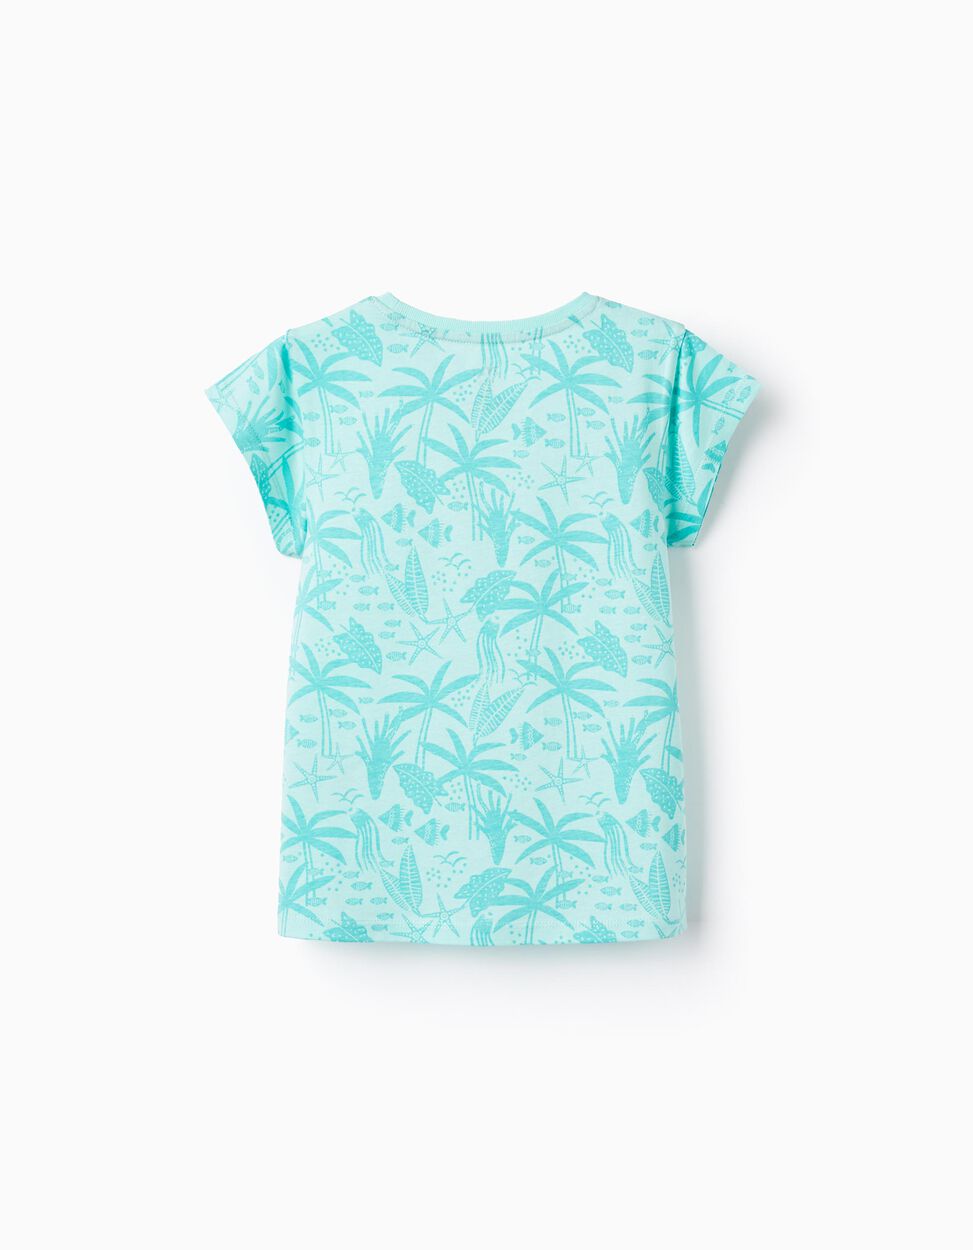 Comprar Online Pack 2 T-shirts de Algodão para Menina 'Peixe', Rosa/Verde-Água